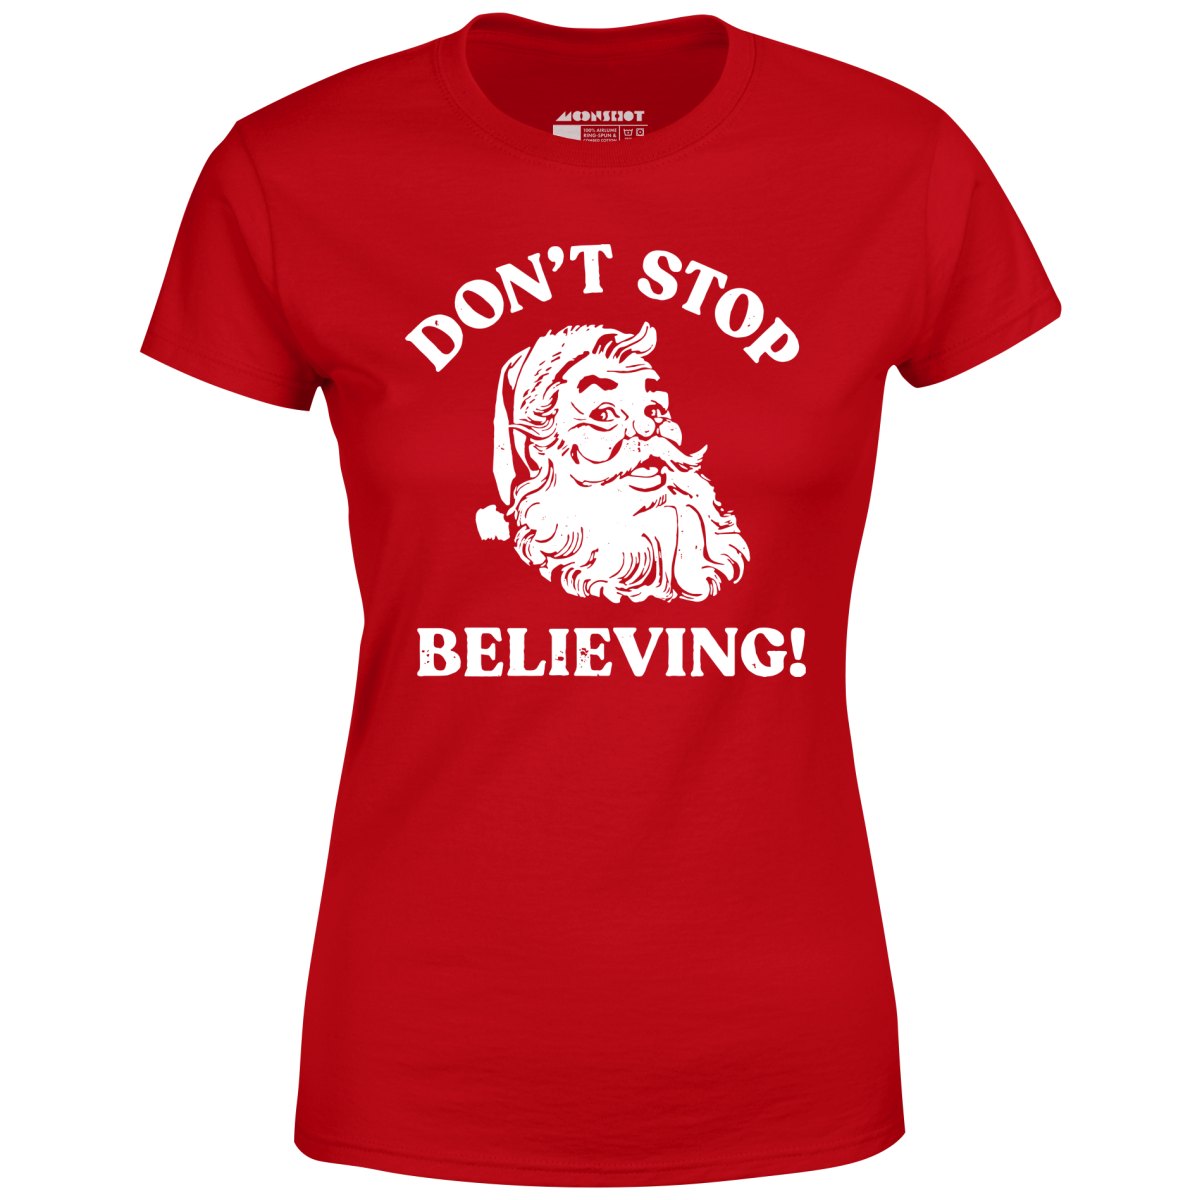 Don't Stop Believing - Women's T-Shirt